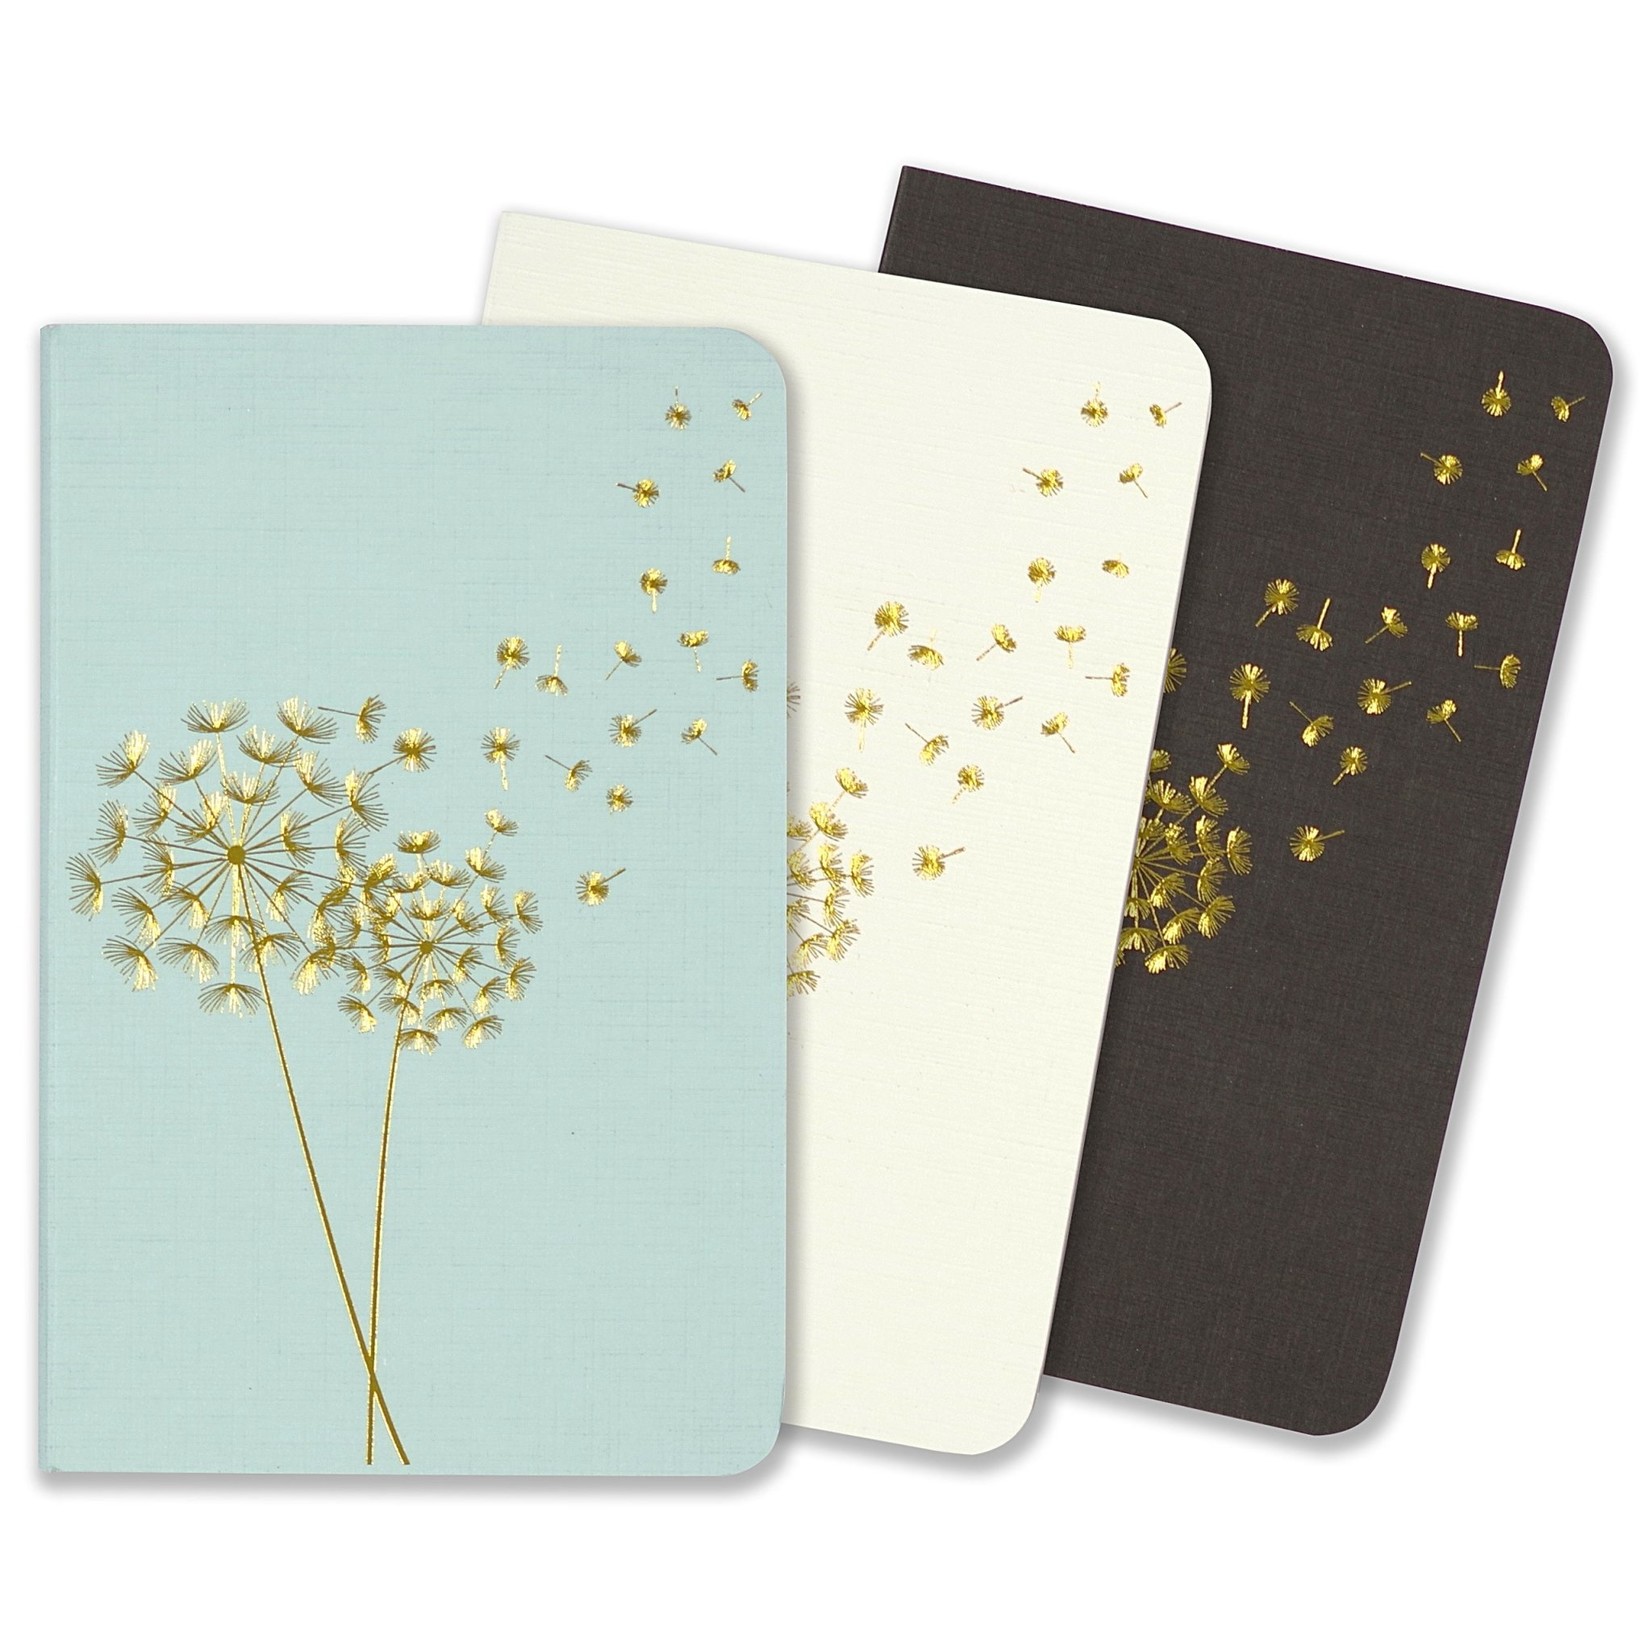 Peter Pauper Press Jotter Notebooks: Dandelion Wishes (3-pack) (Dot Grid Pattern)